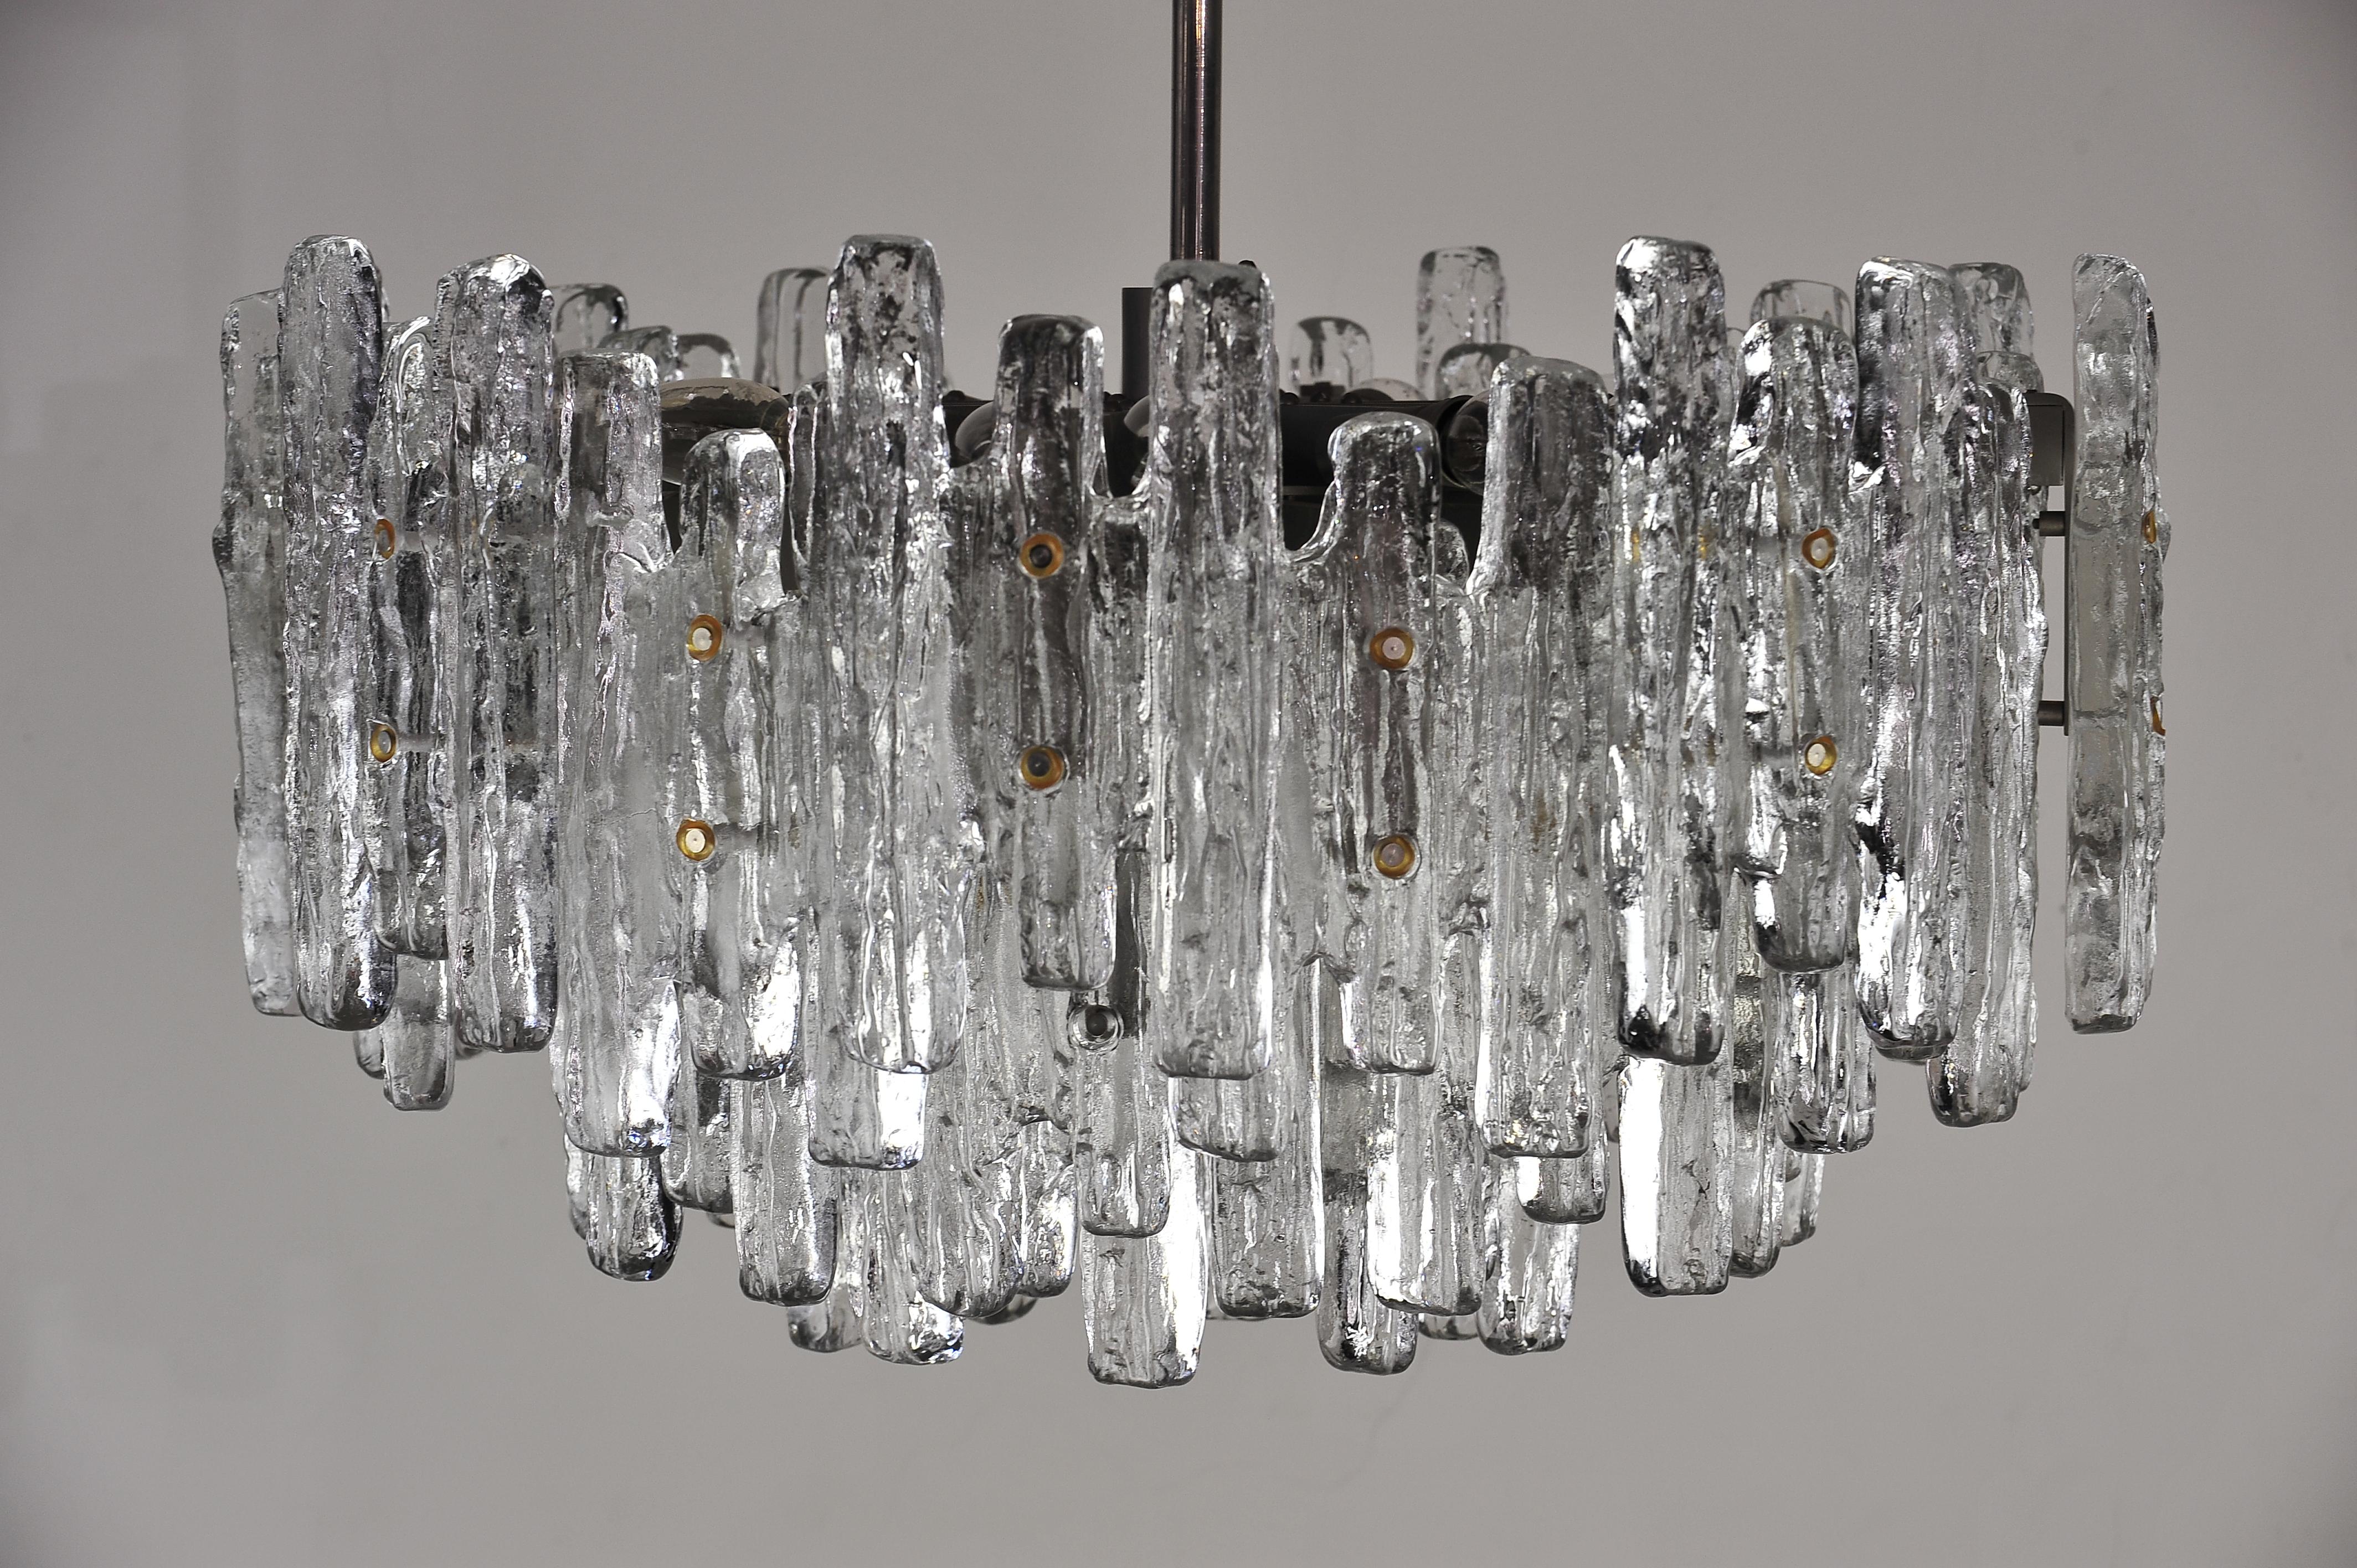 Huge tiered glass chandelier by J.T. Kalmar.
Original condition.